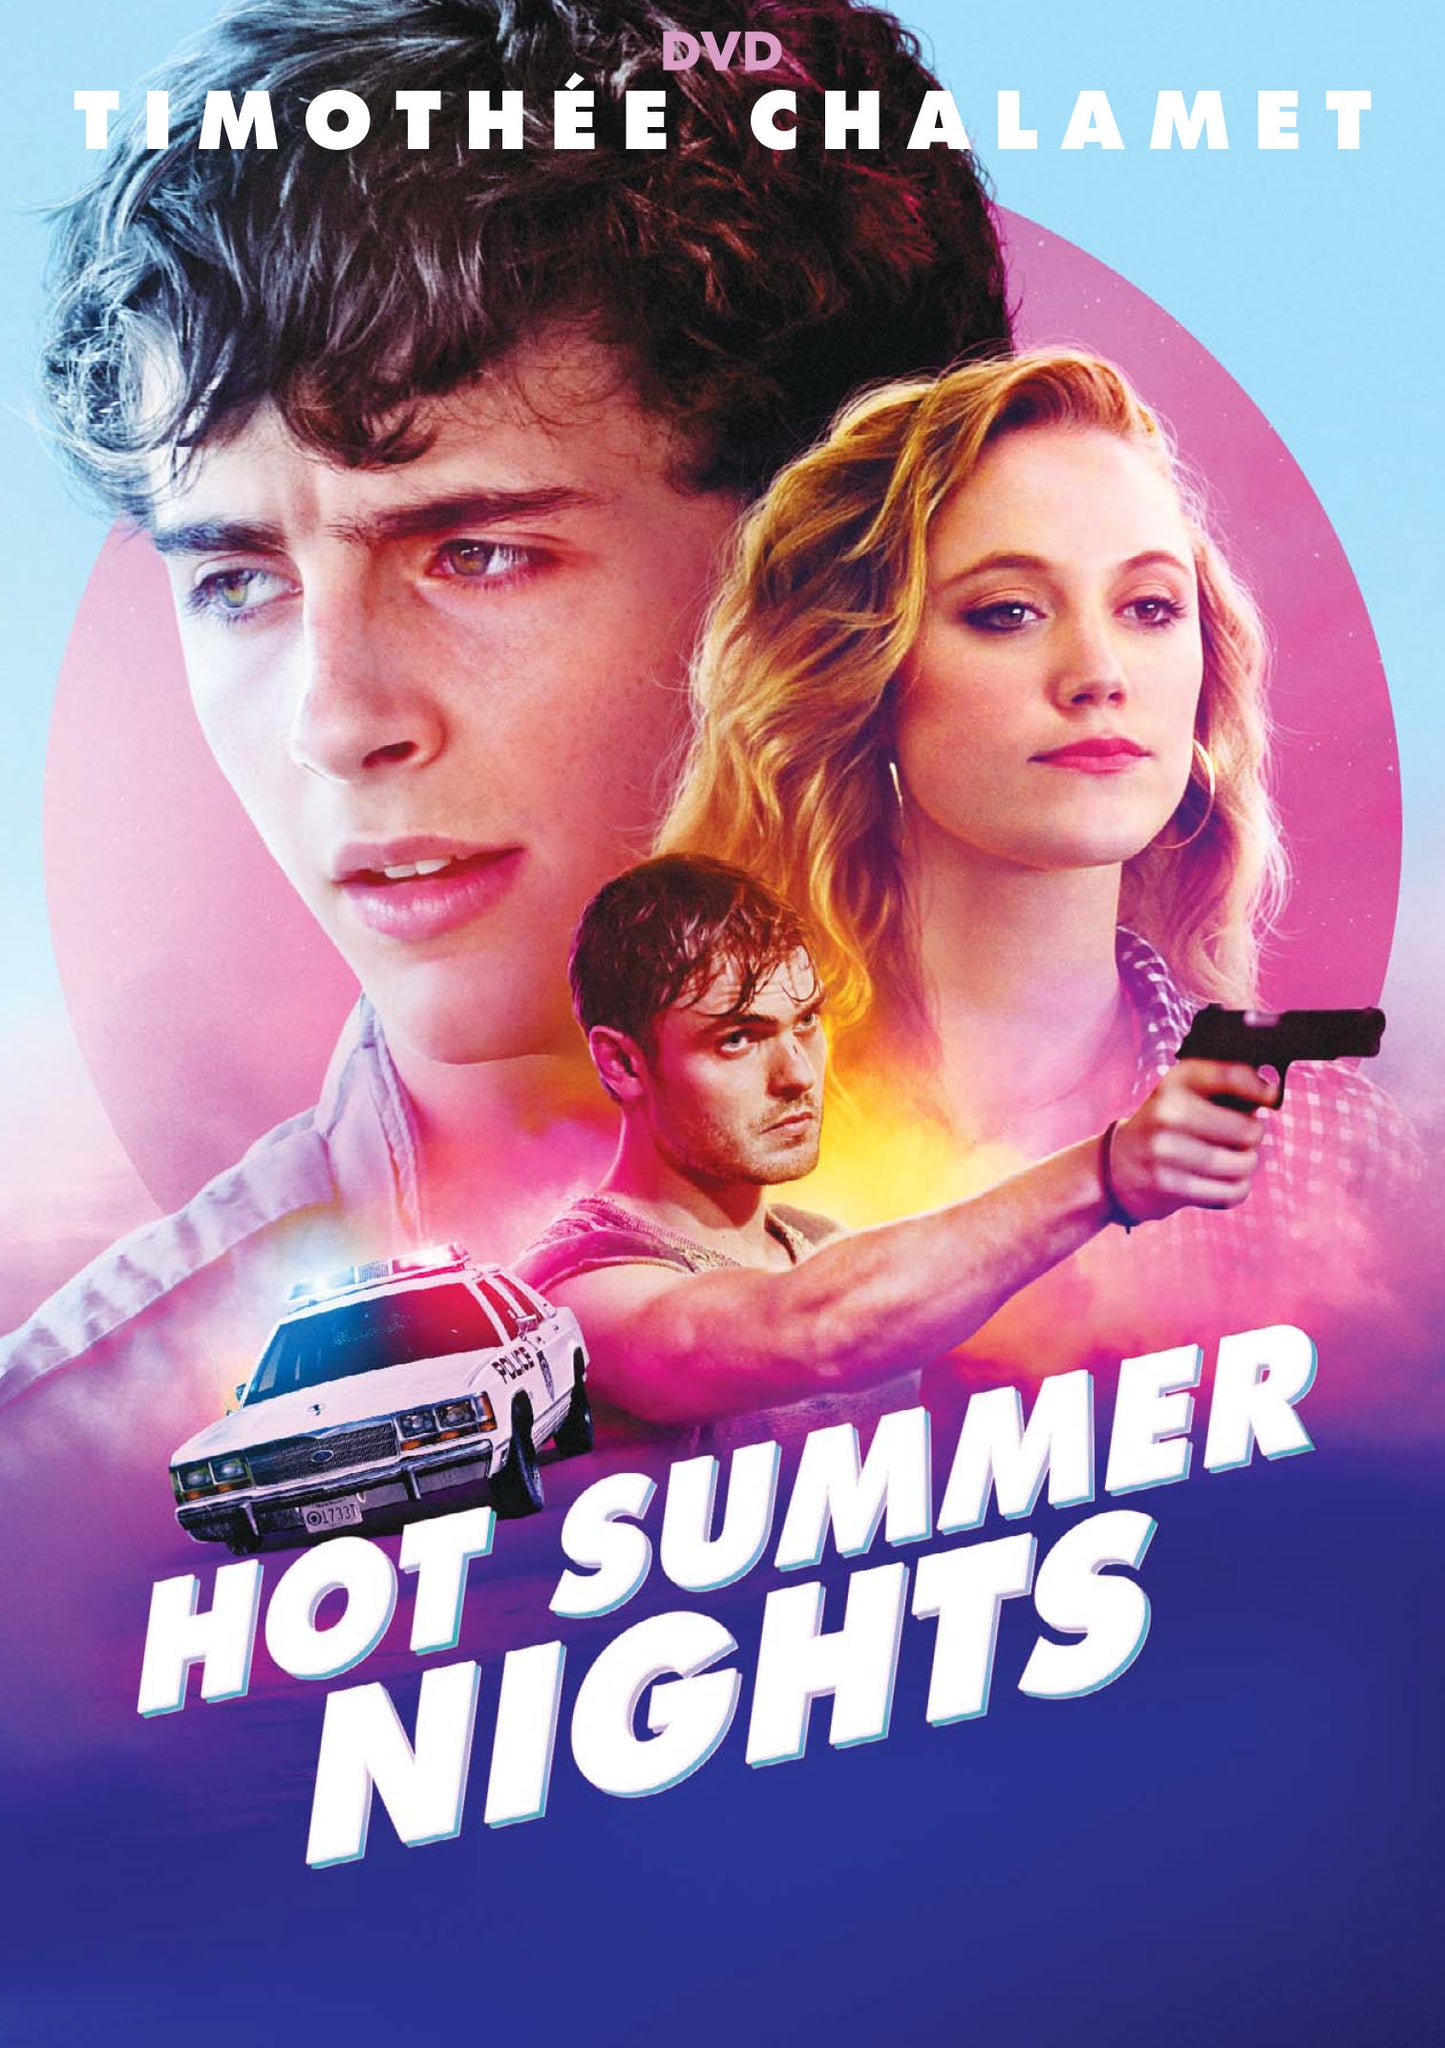 Hot Summer Nights cover art